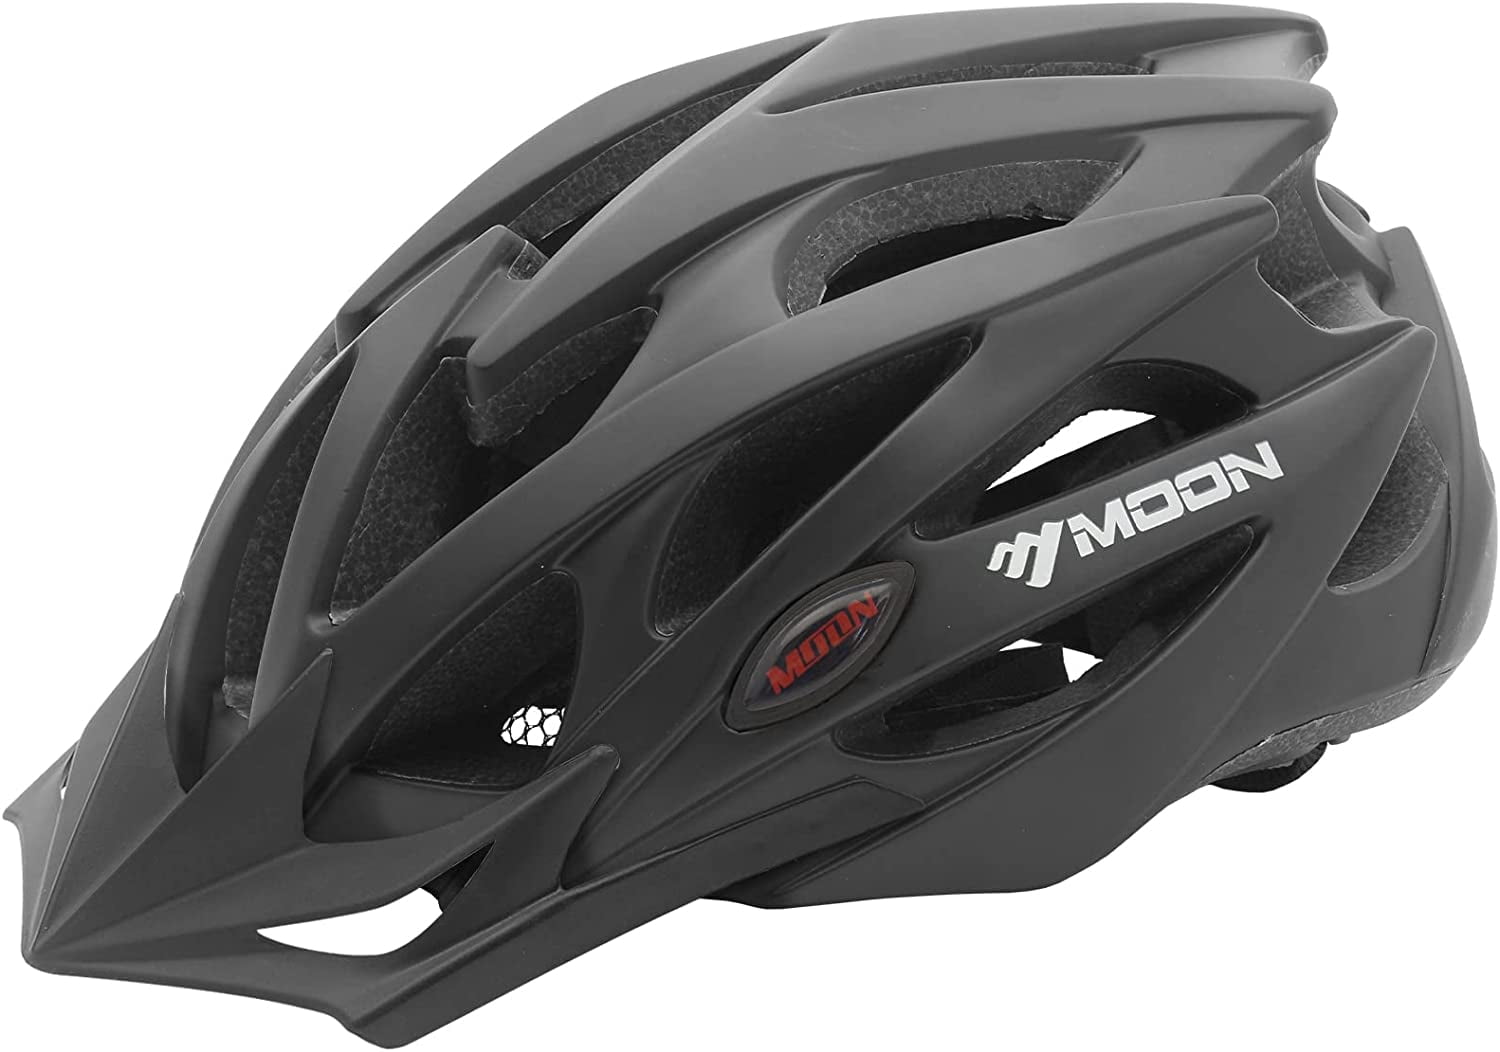 MOON Kids Bike Helmet,Knucklehead Unisex Youth Mountain Road Bicycle Helmet for Girls and Boys with Detachable Visor 